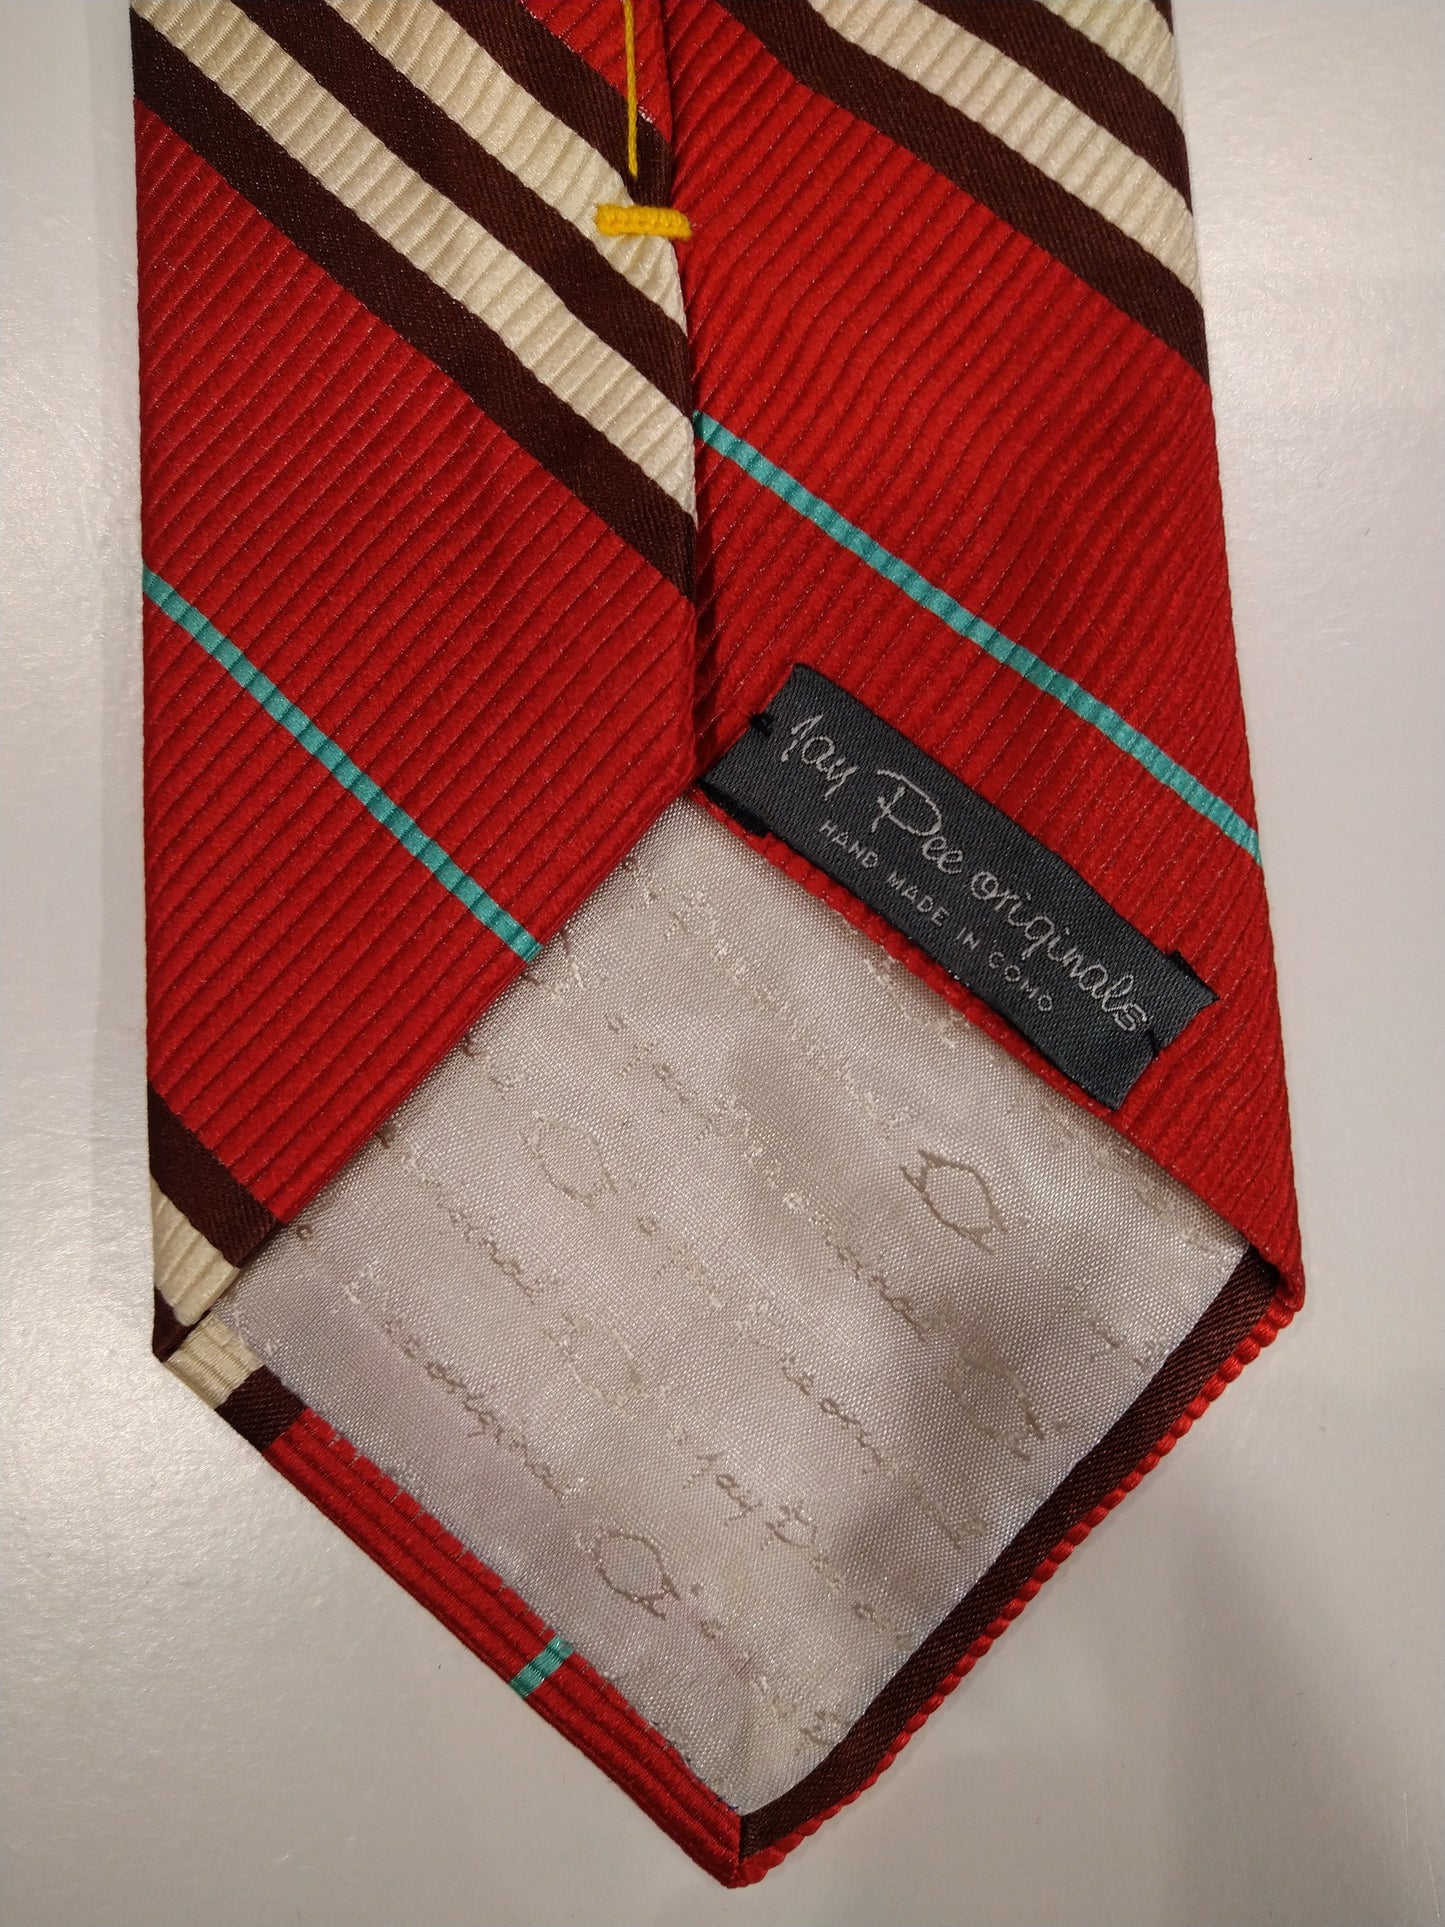 Jay Pee Original Hand Made in Como Silk Tie. Rosso / marrone / bianco / blu a strisce.